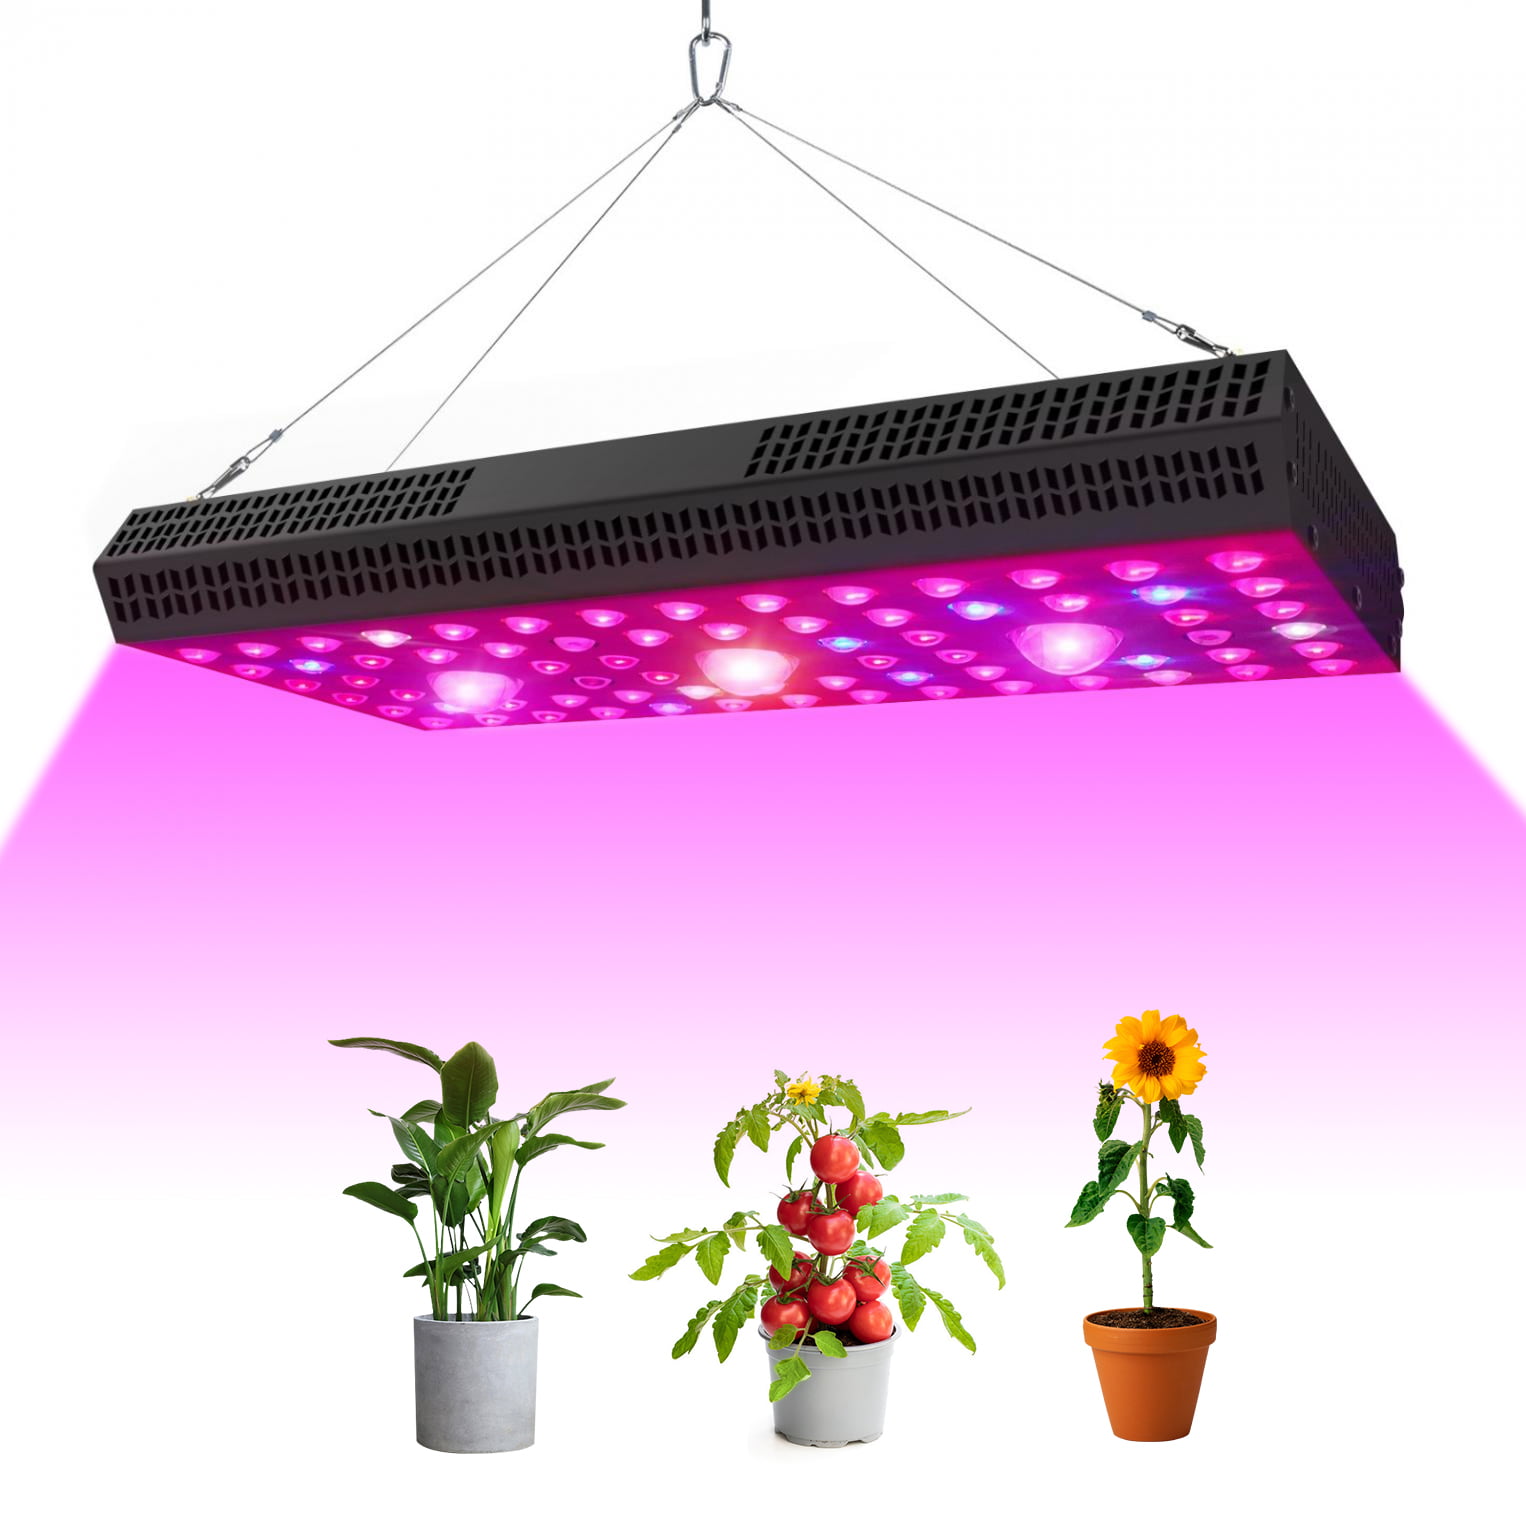 2× 300W Watt COB Led Grow Light Full Spectrum Lamp For Plant Hydroponics Flower